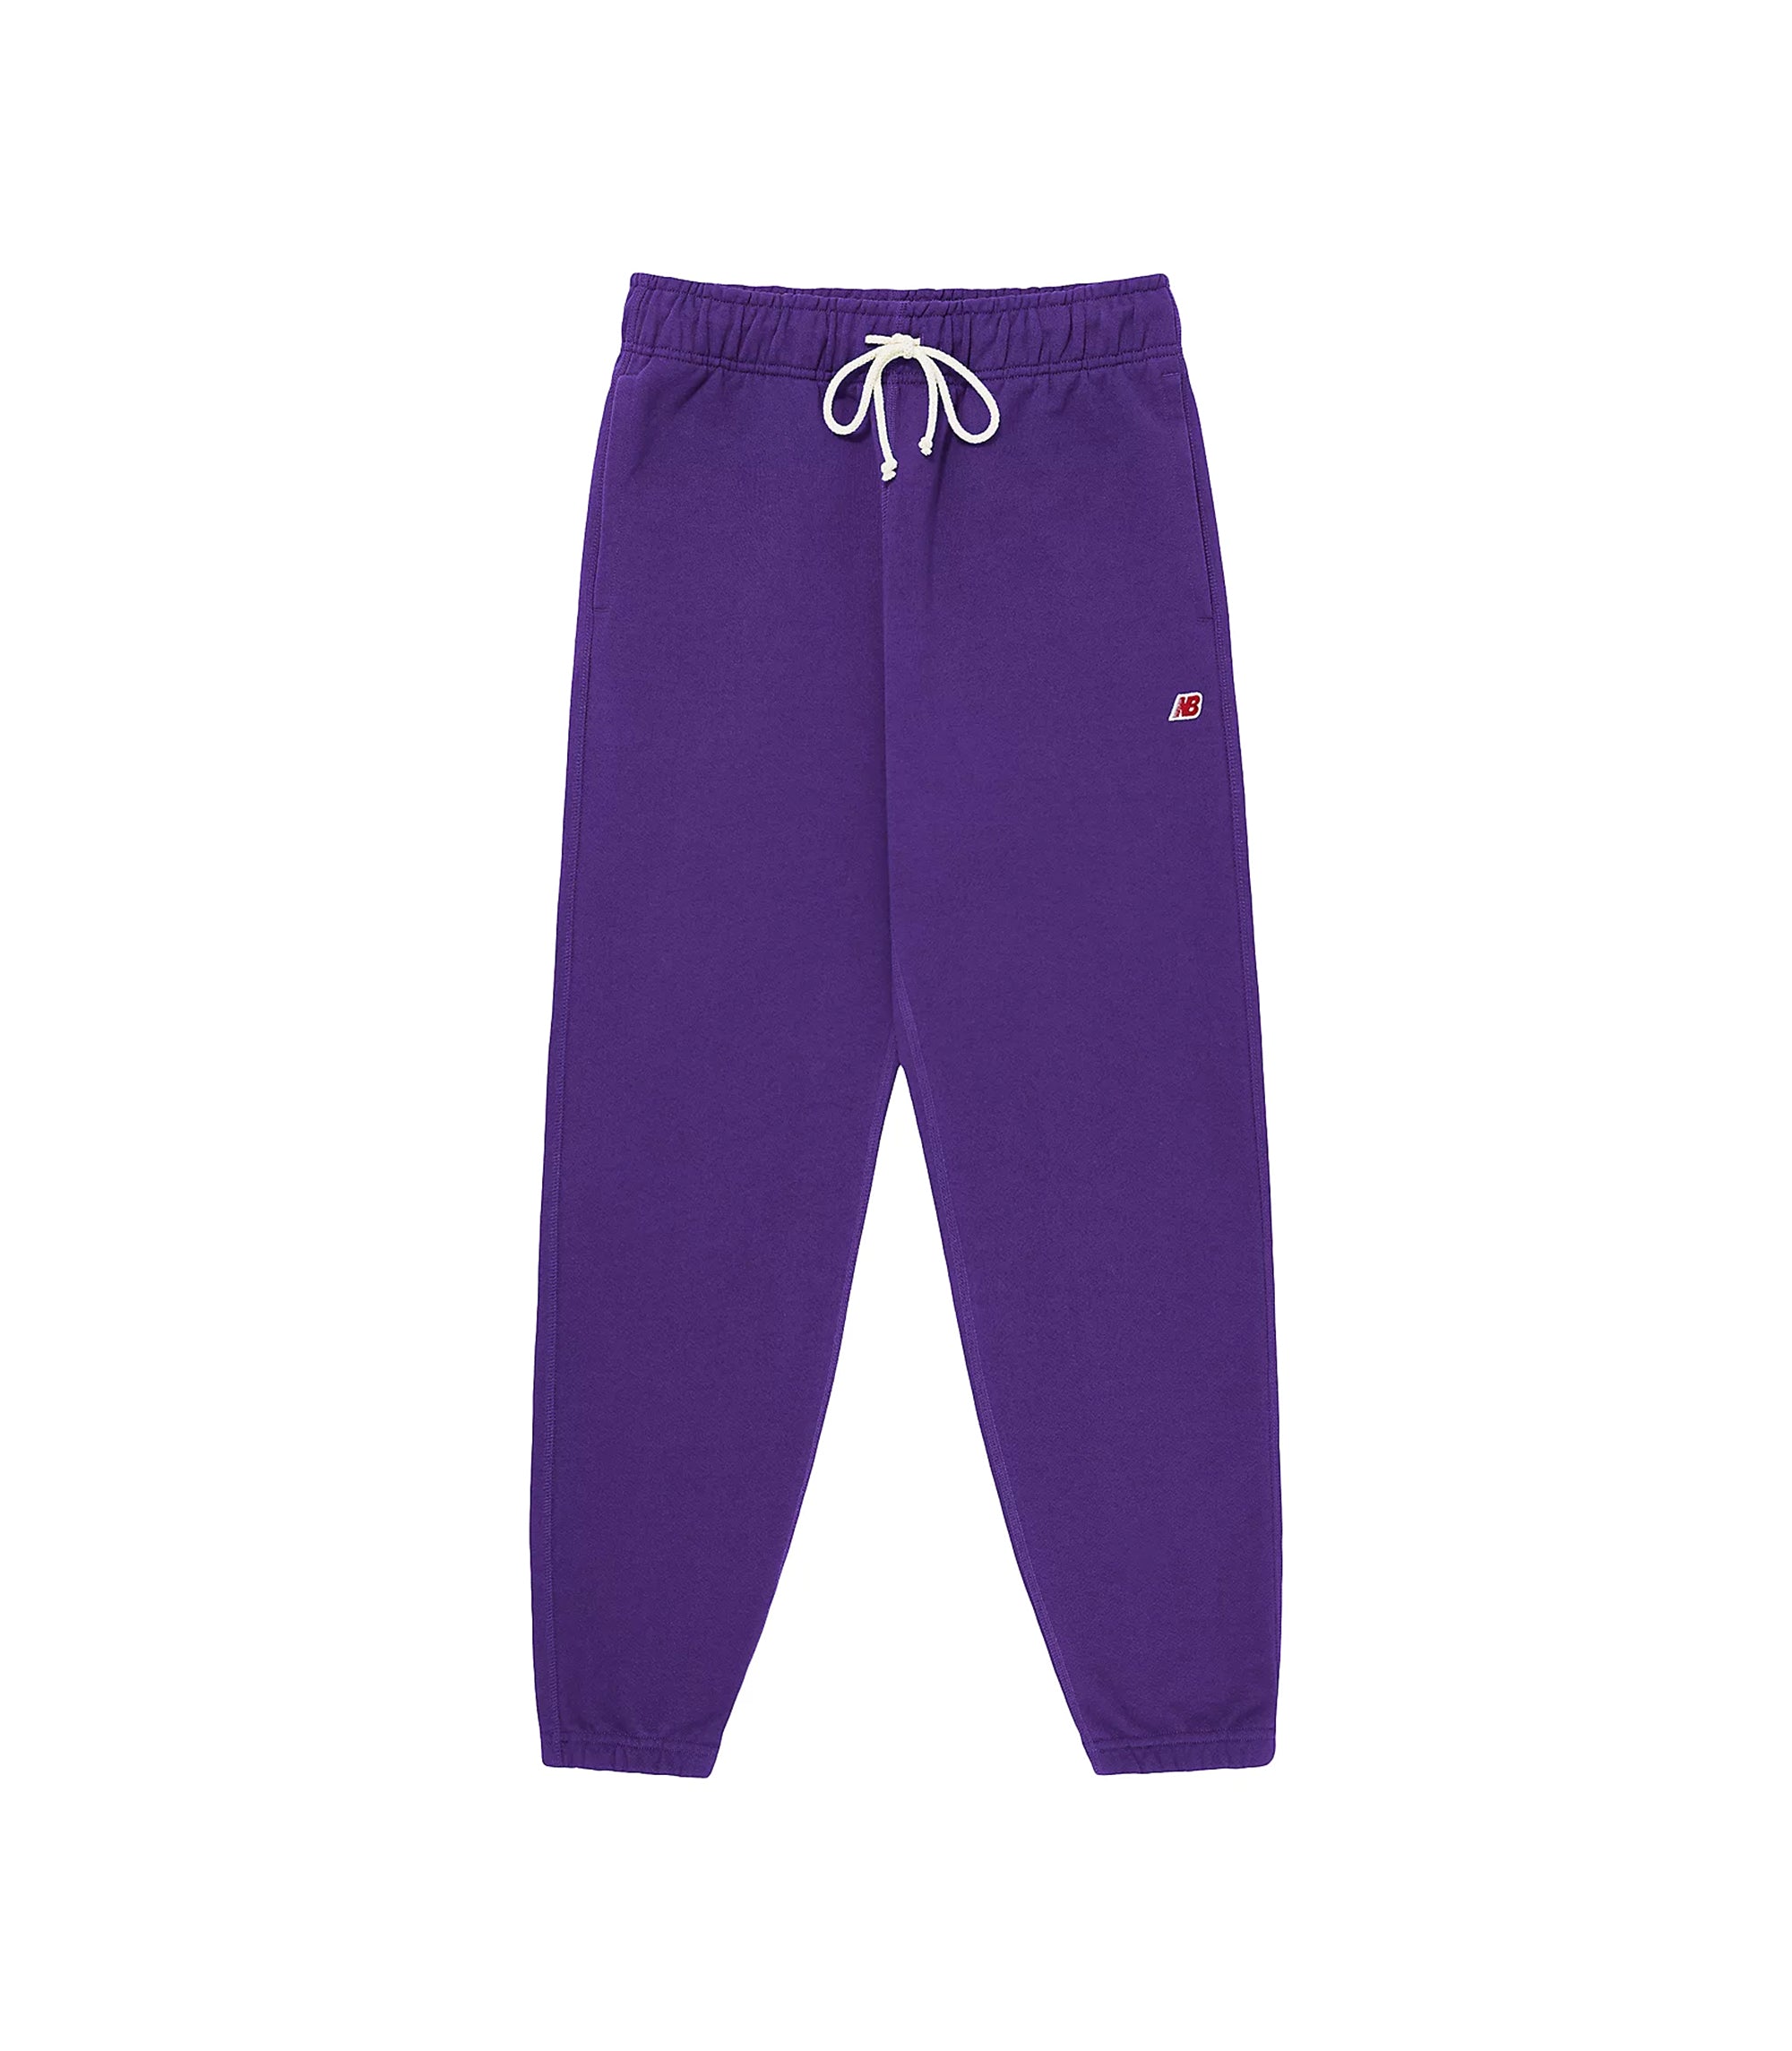 Made in USA Sweatpants - Prism Purple